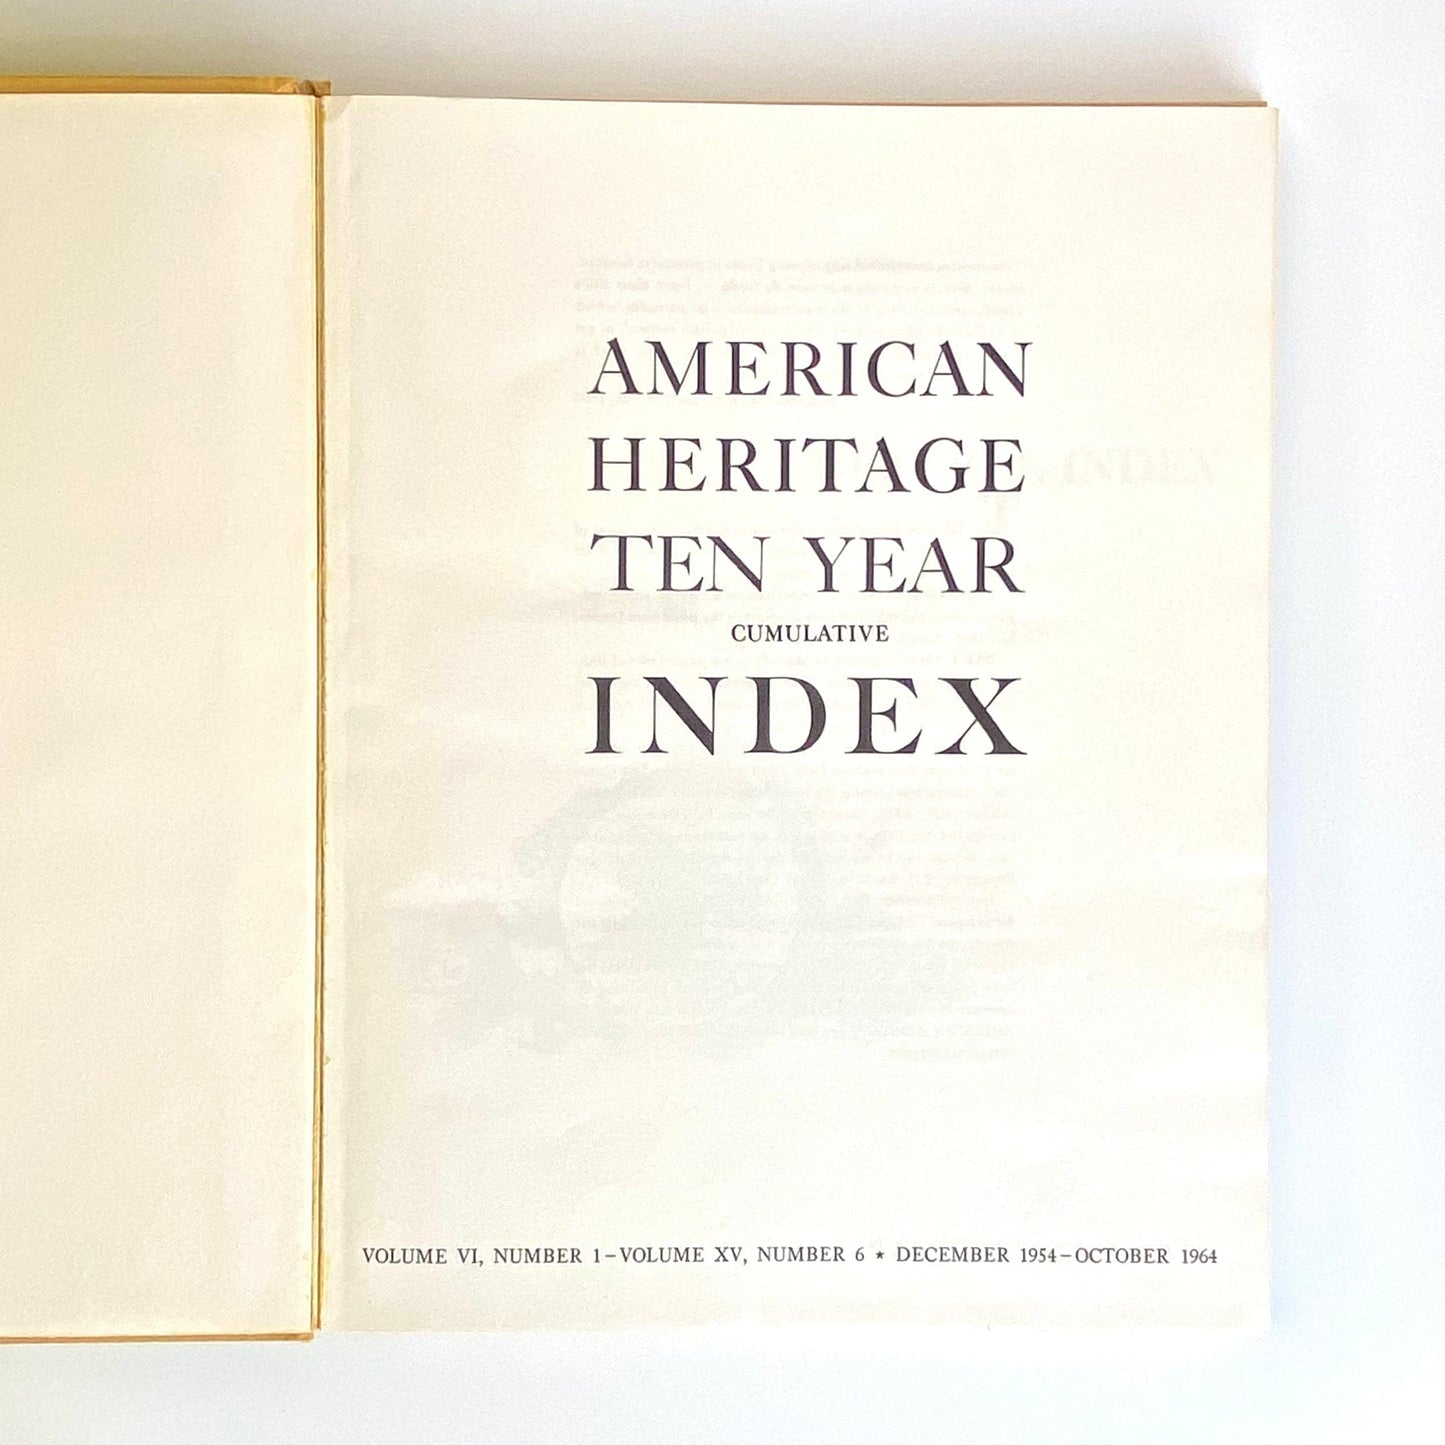 Vintage American Heritage Ten Year Cumulative Index Volume VI, Number 1 - Volume XV, Number 6 • December 1954 - October 1964